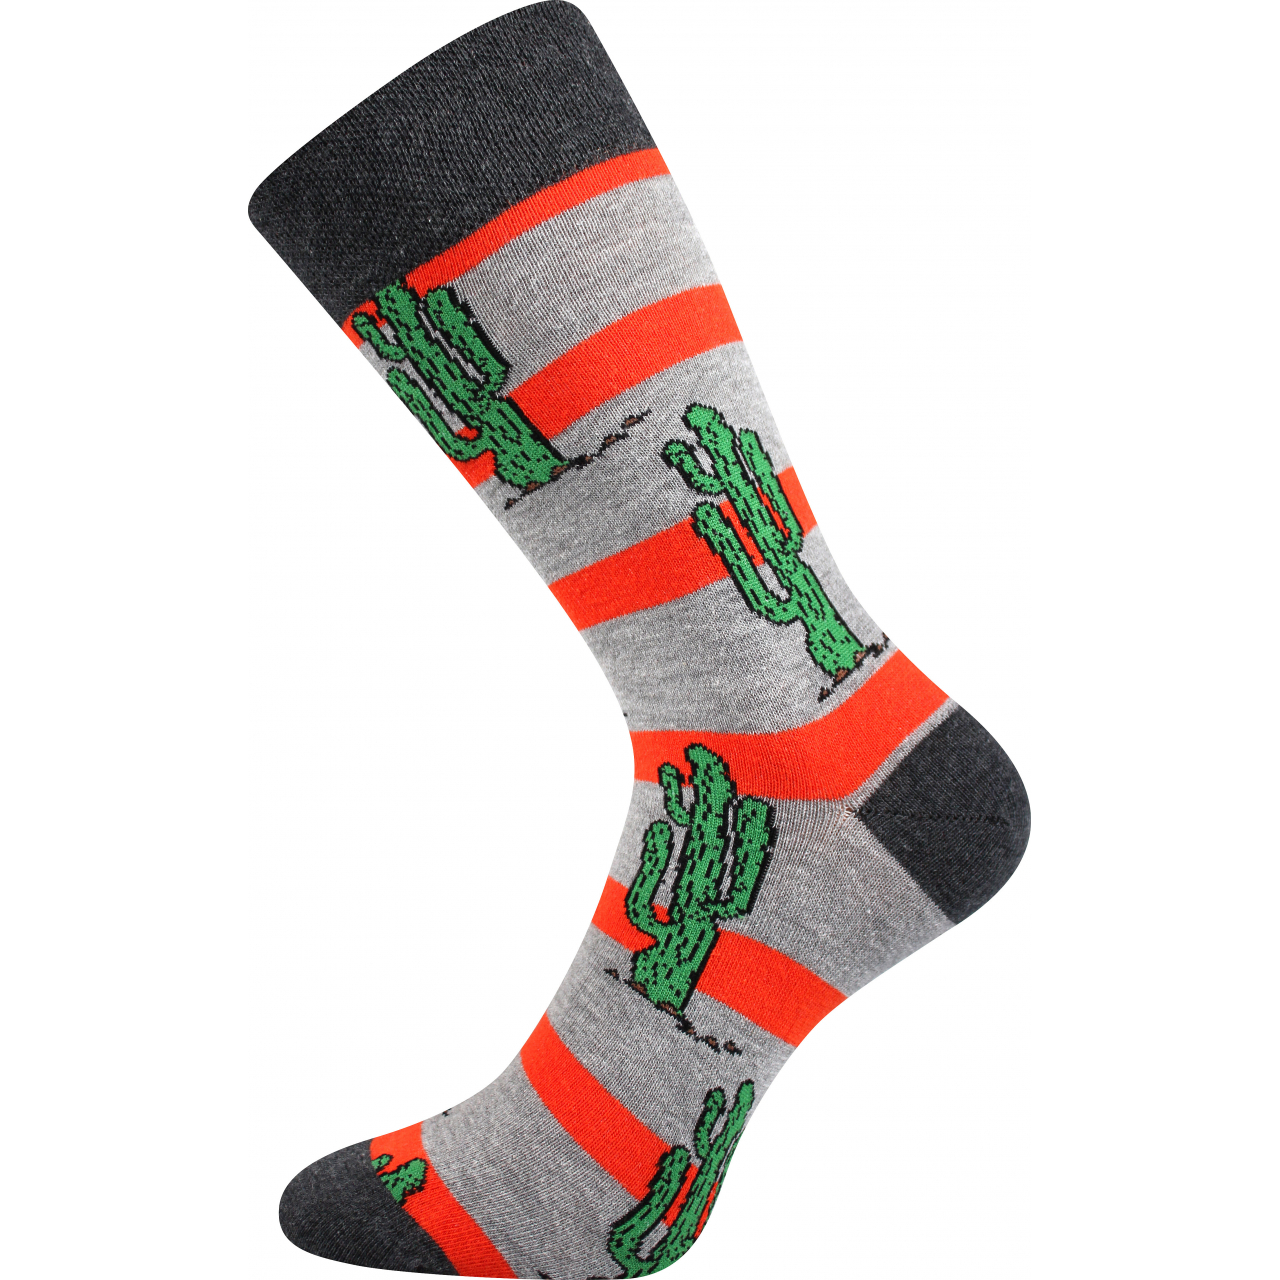 Ponožky trendy pánské Lonka Depate Kaktusy - šedé-červené, 39-42